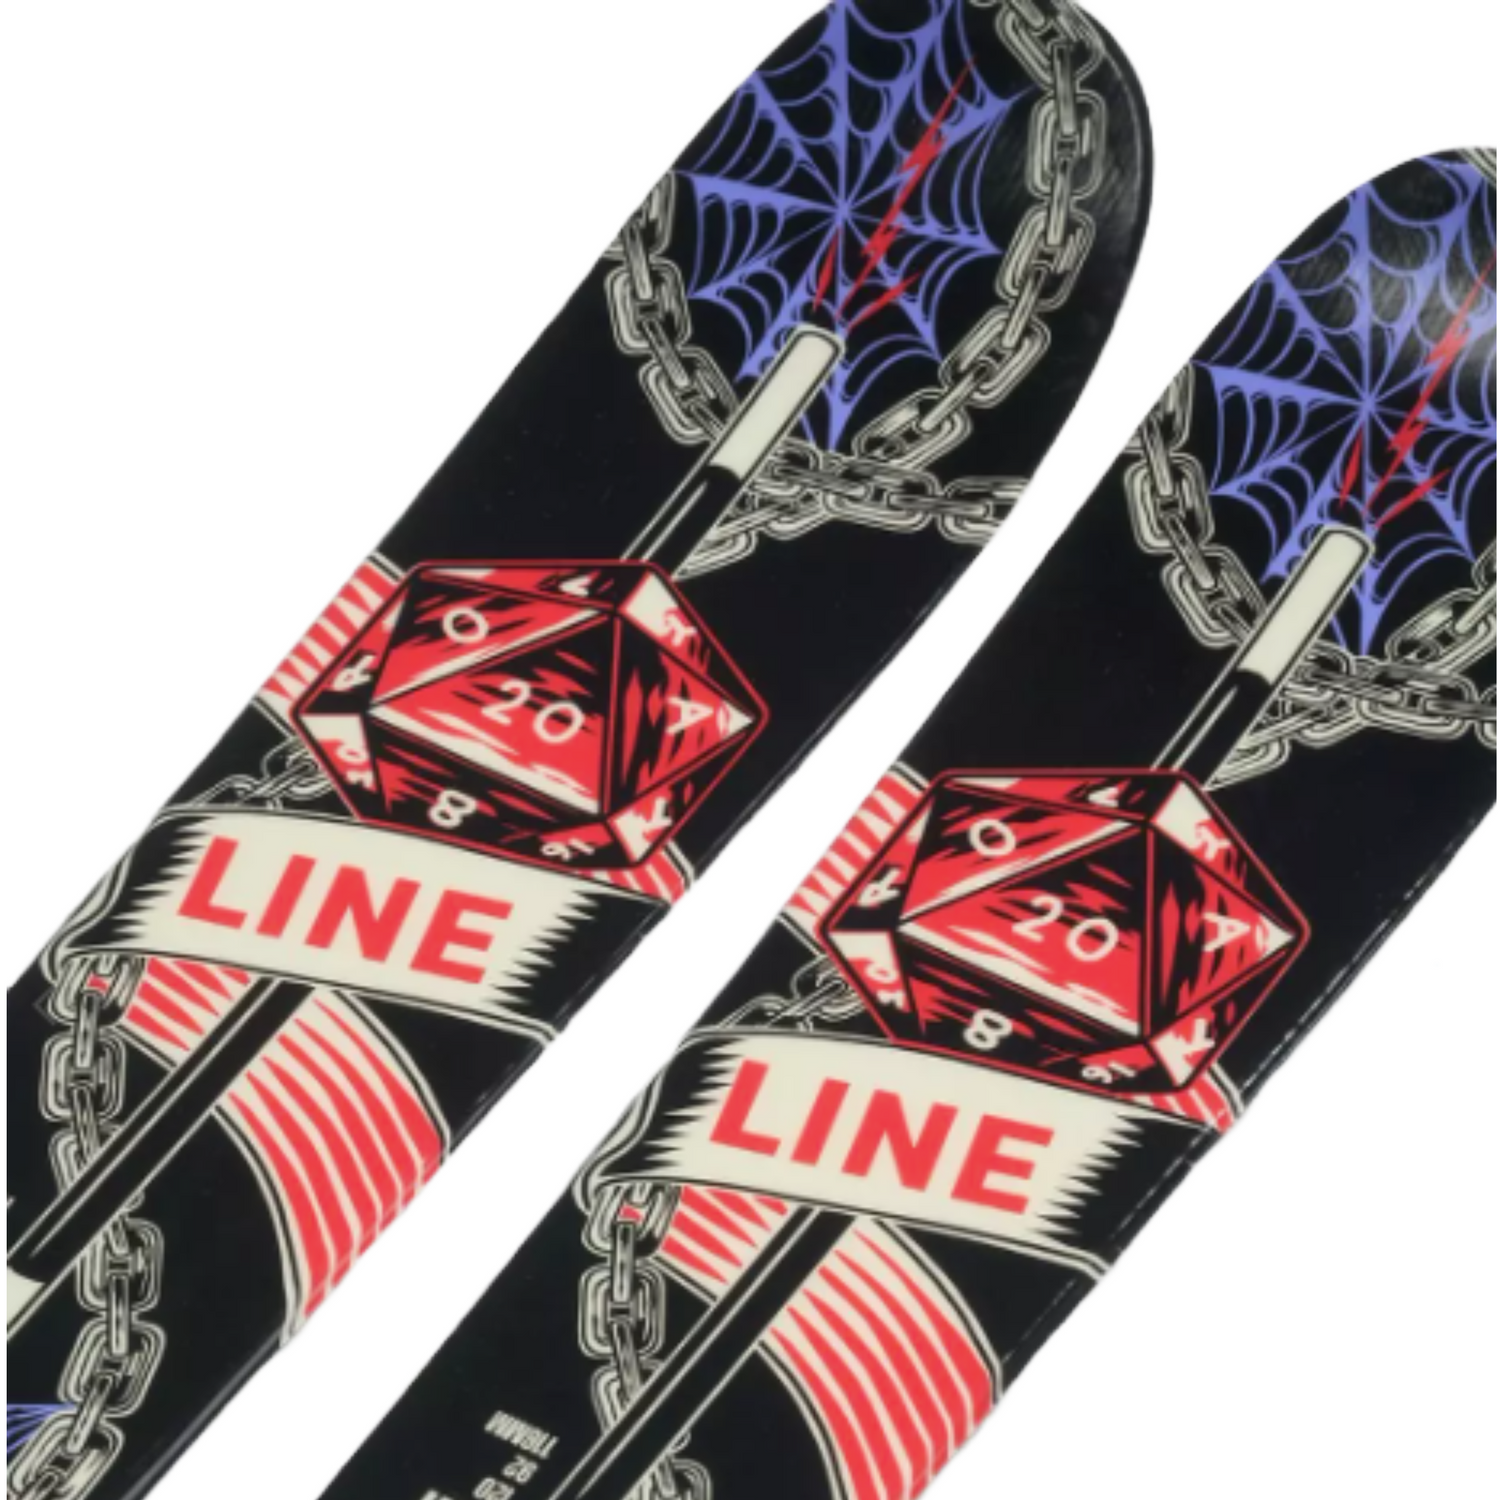 Line Honey badger TBL Alpine Park skis